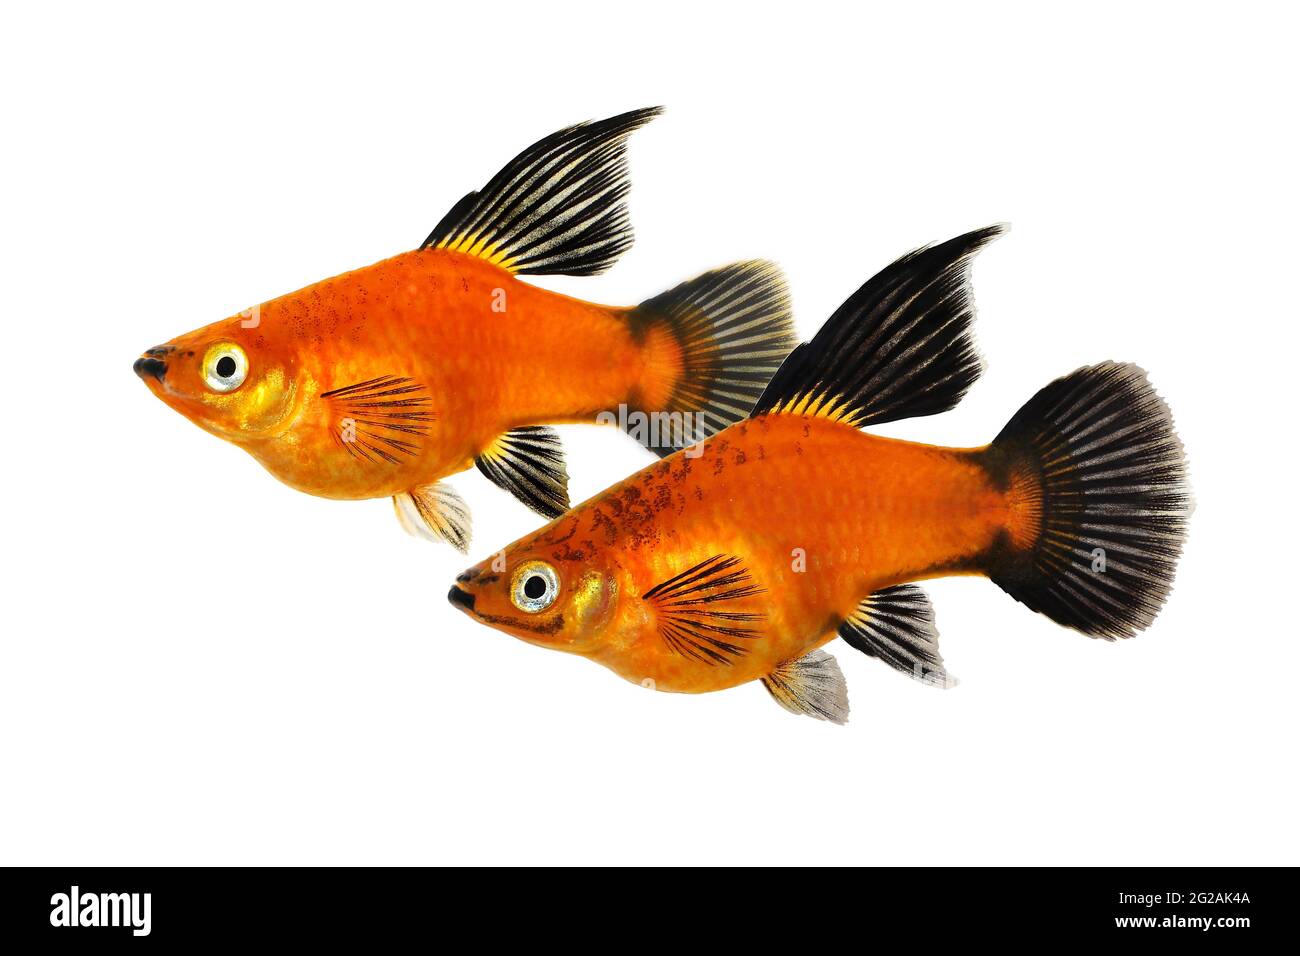 https://c8.alamy.com/comp/2G2AK4A/high-fin-red-wag-platy-xiphophorus-maculatus-mickey-mouse-platy-aquarium-fish-2G2AK4A.jpg